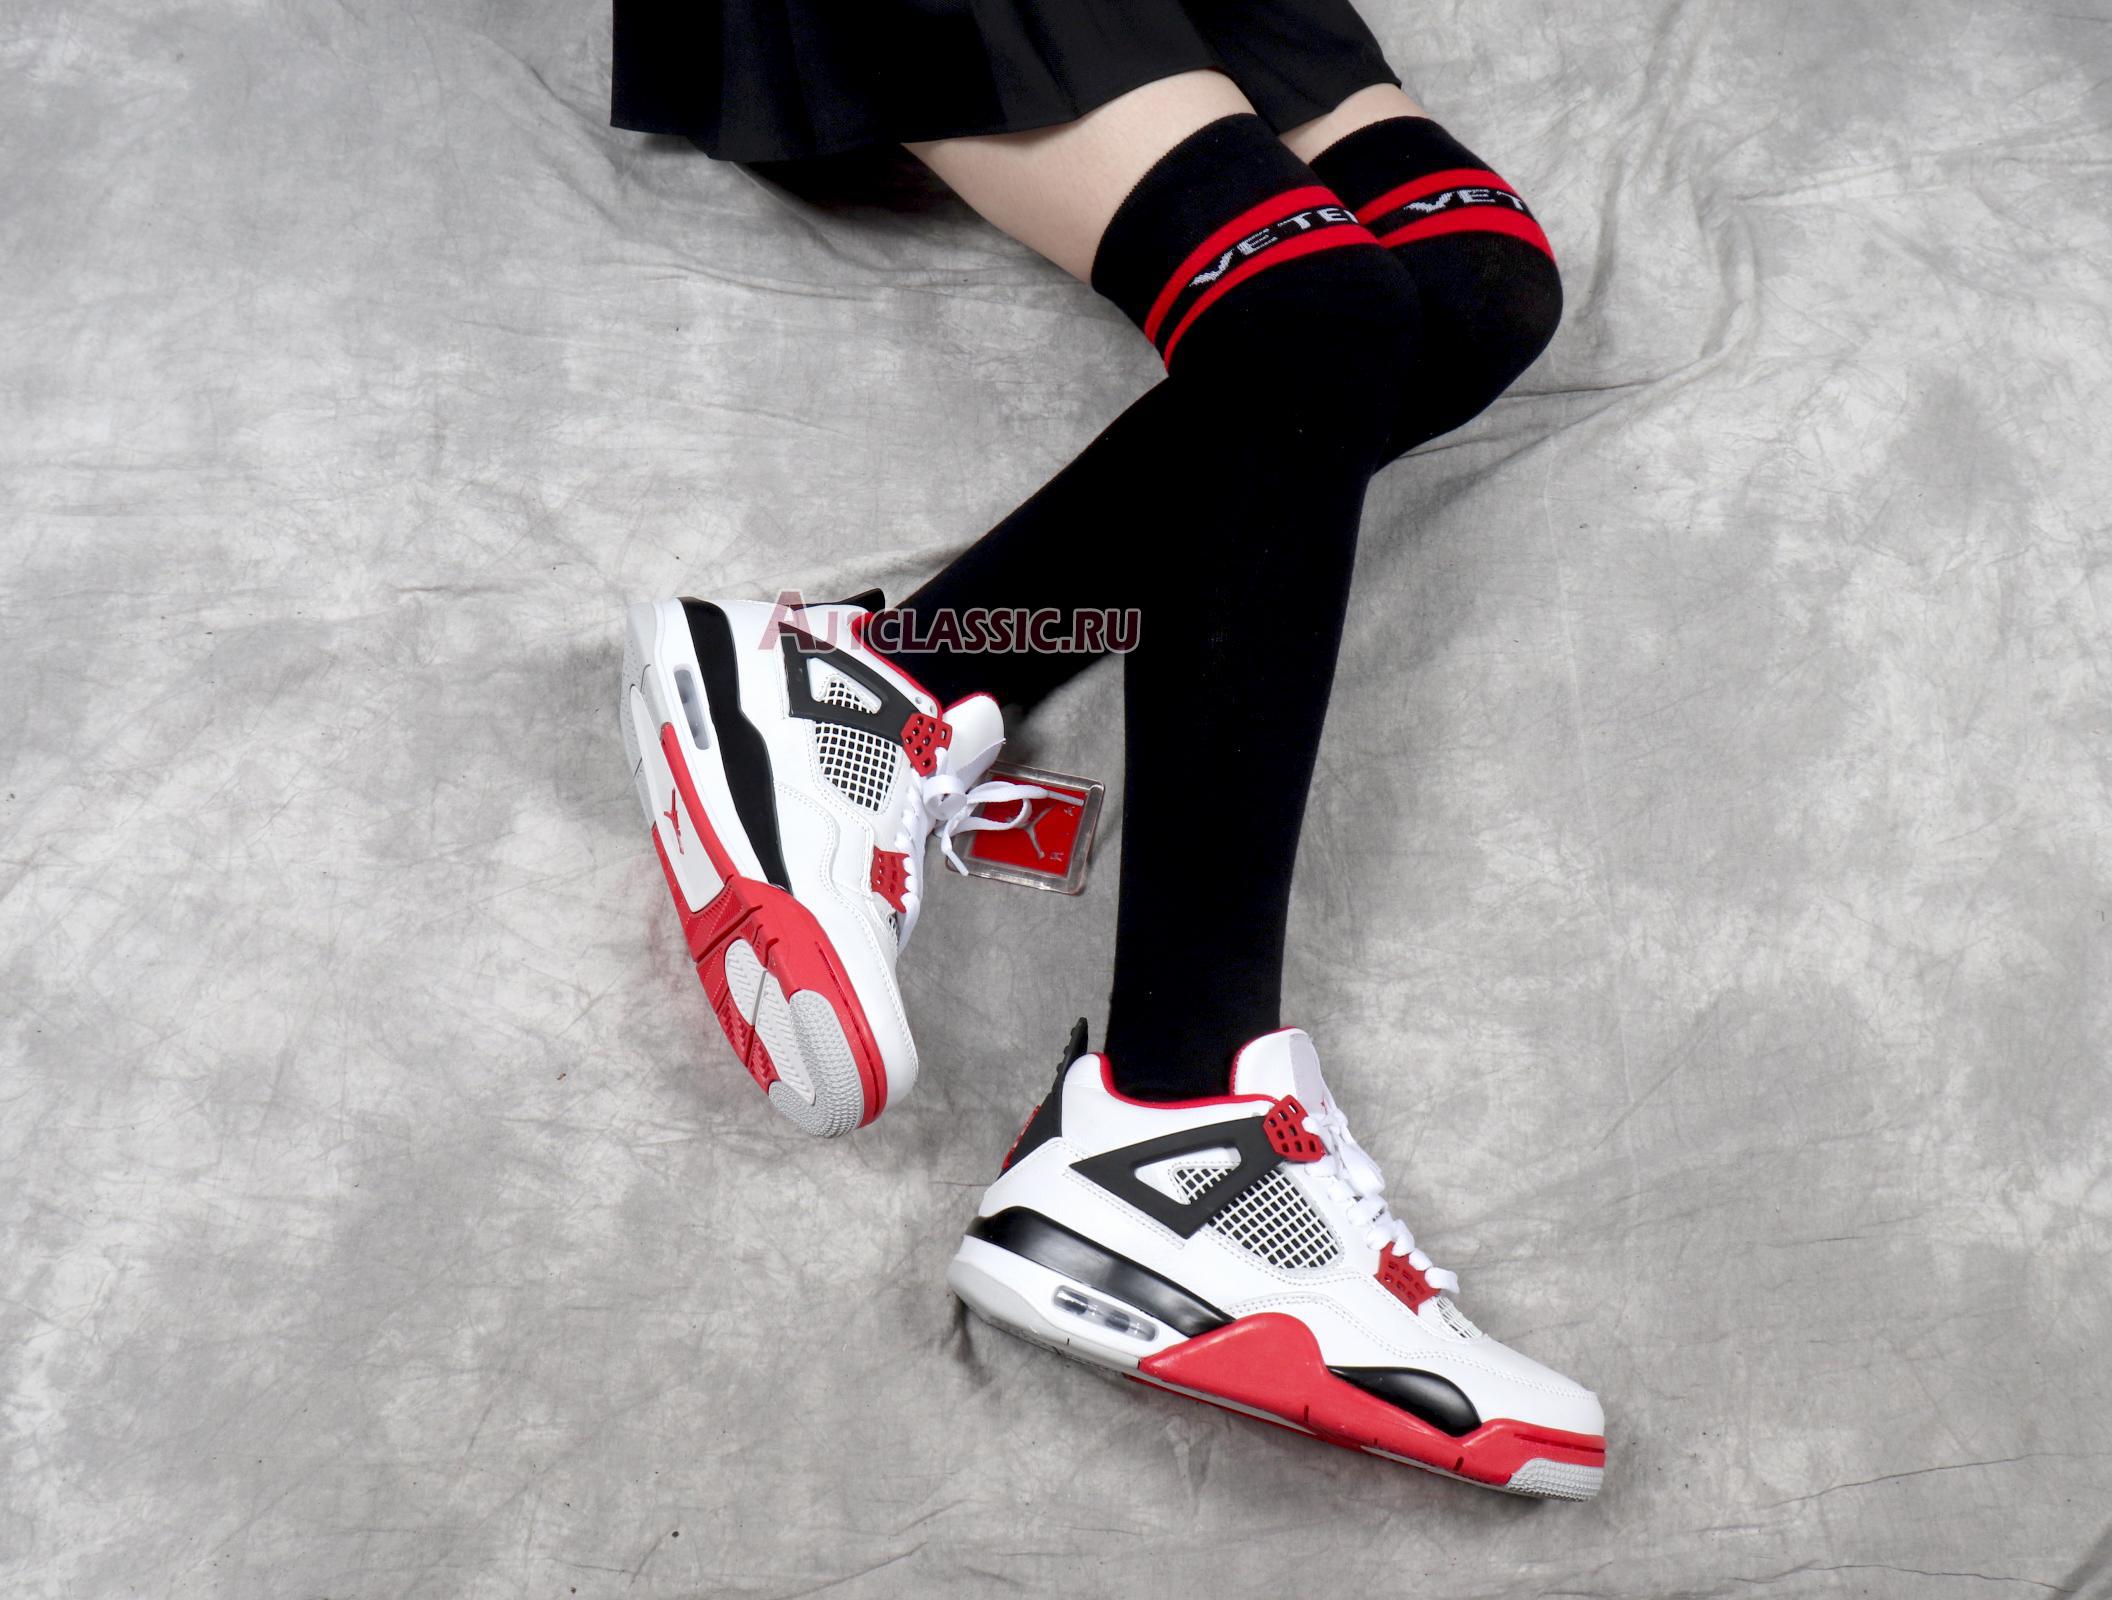 Air Jordan 4 Retro Fire Red 2012 308497-110 White/Varsity Red-Black Sneakers